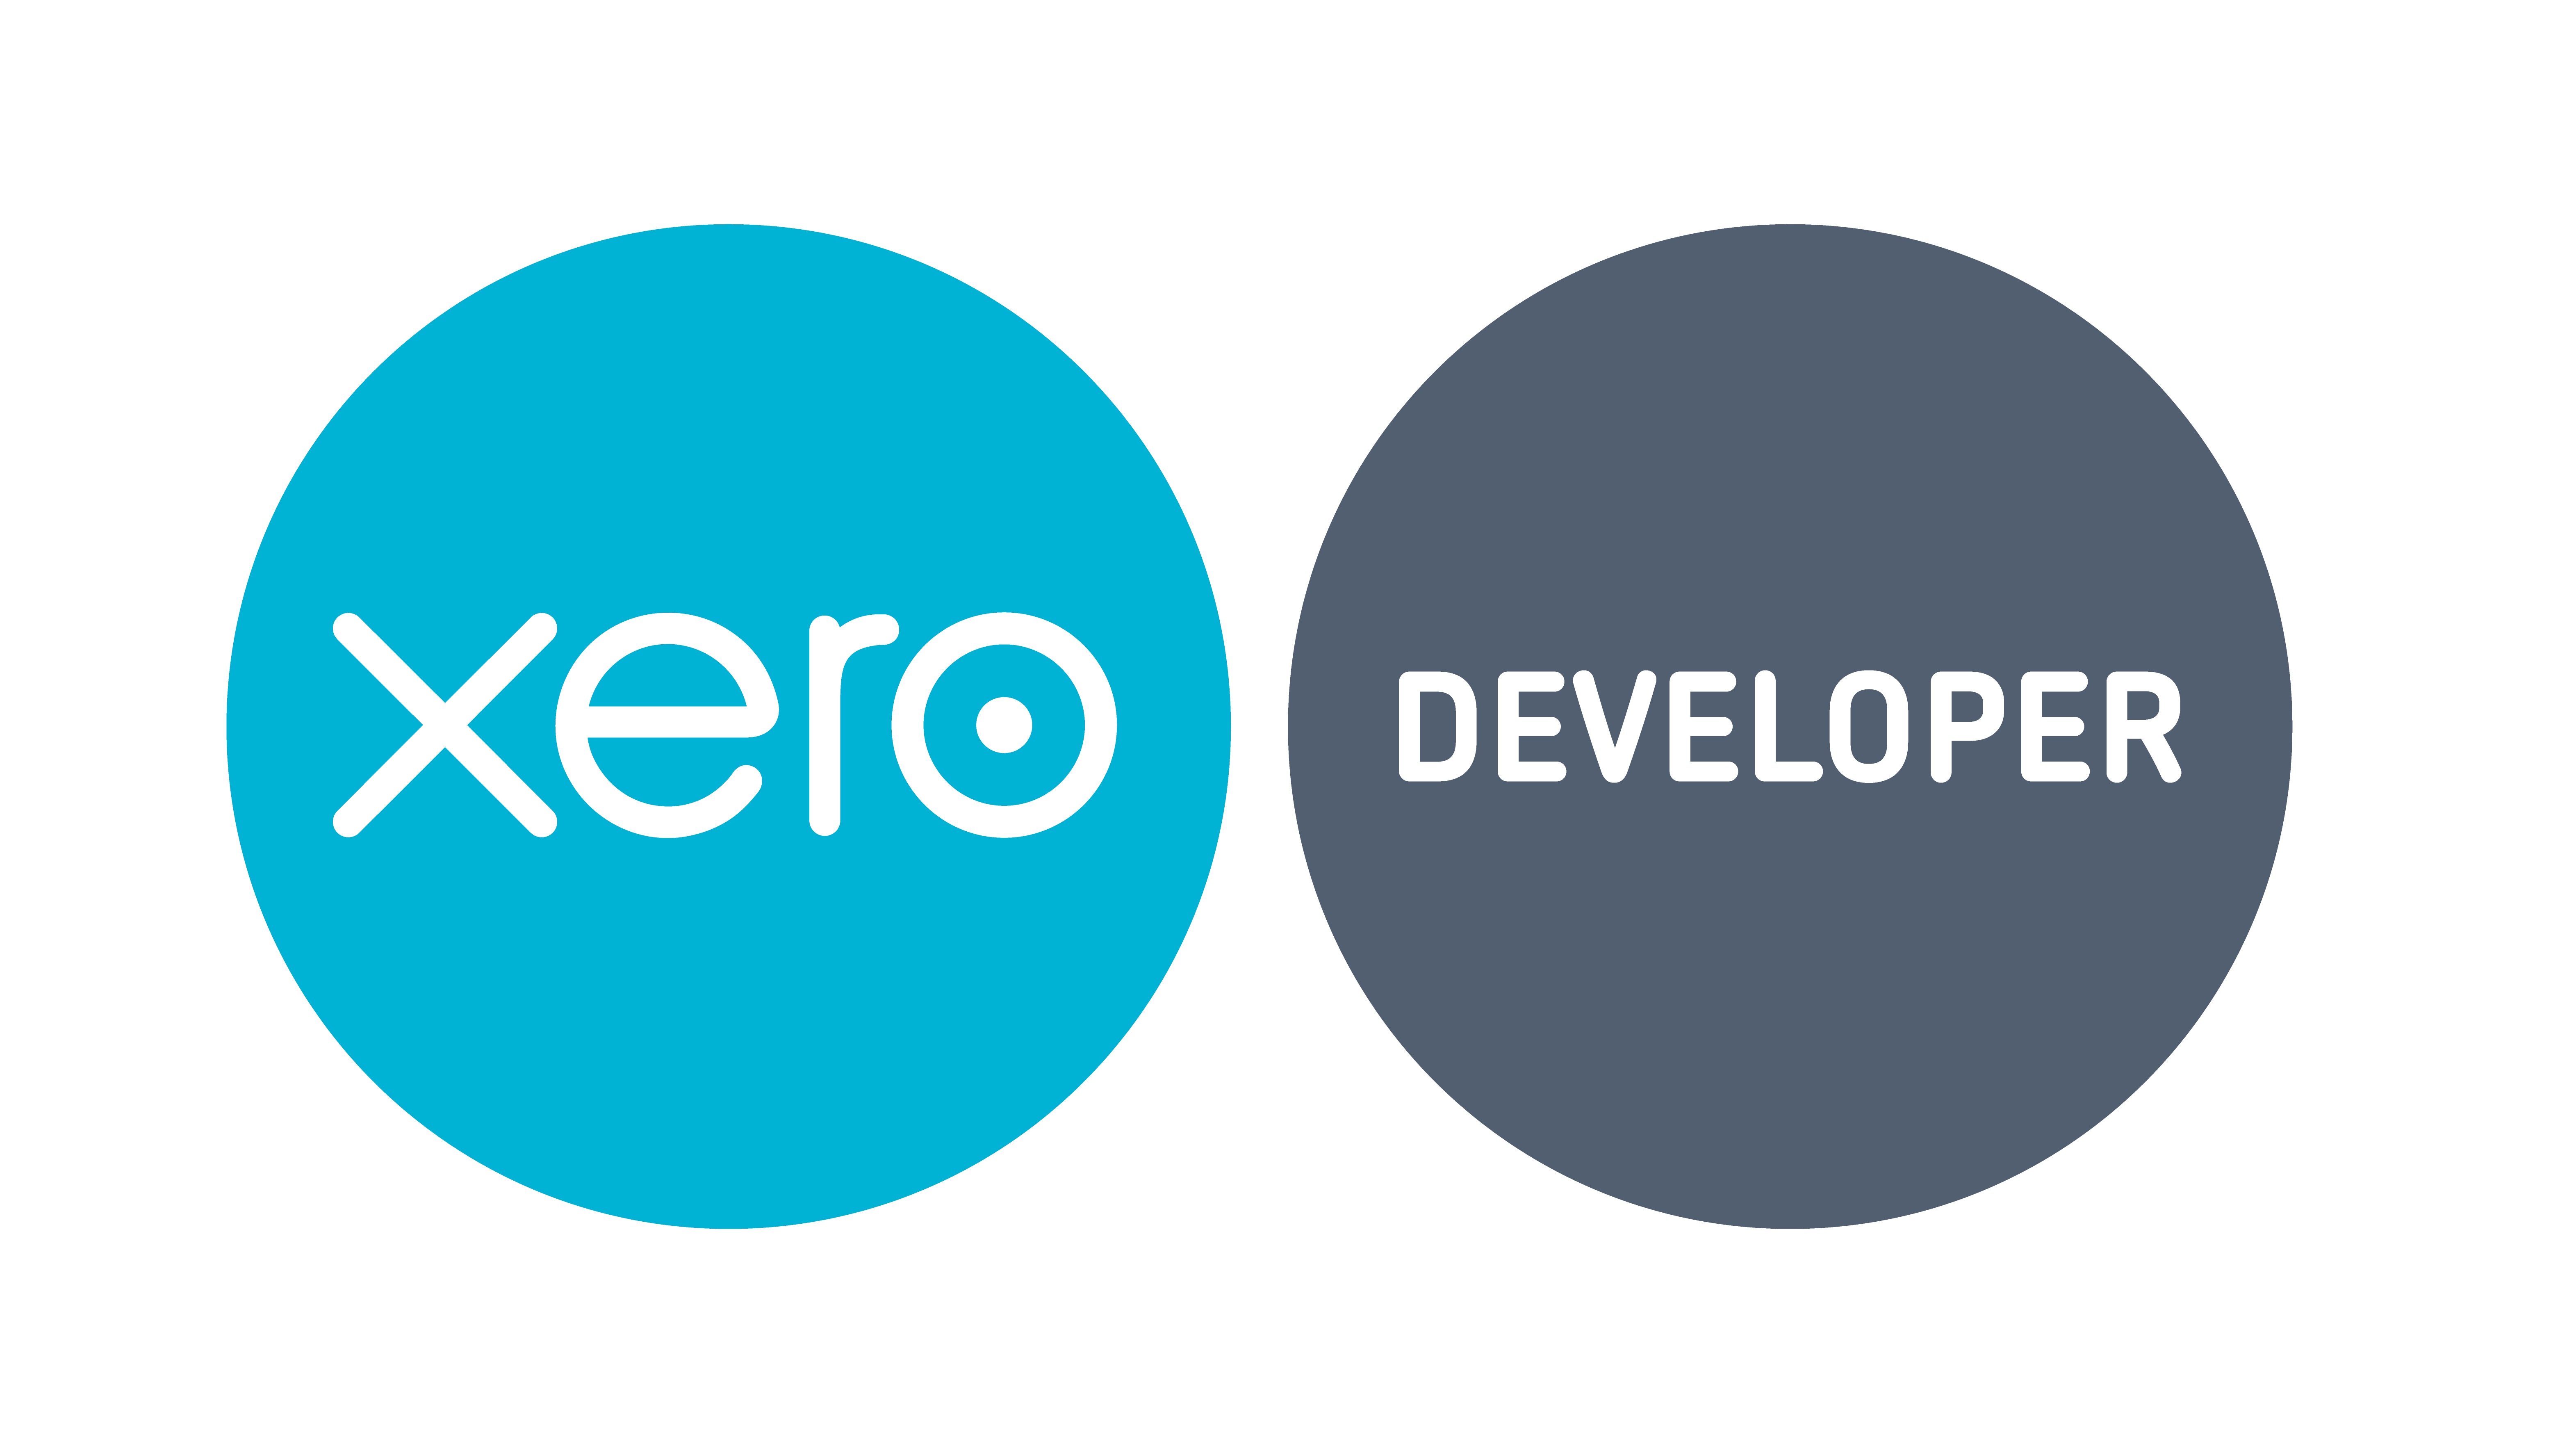 xero-developer-logo-RGB